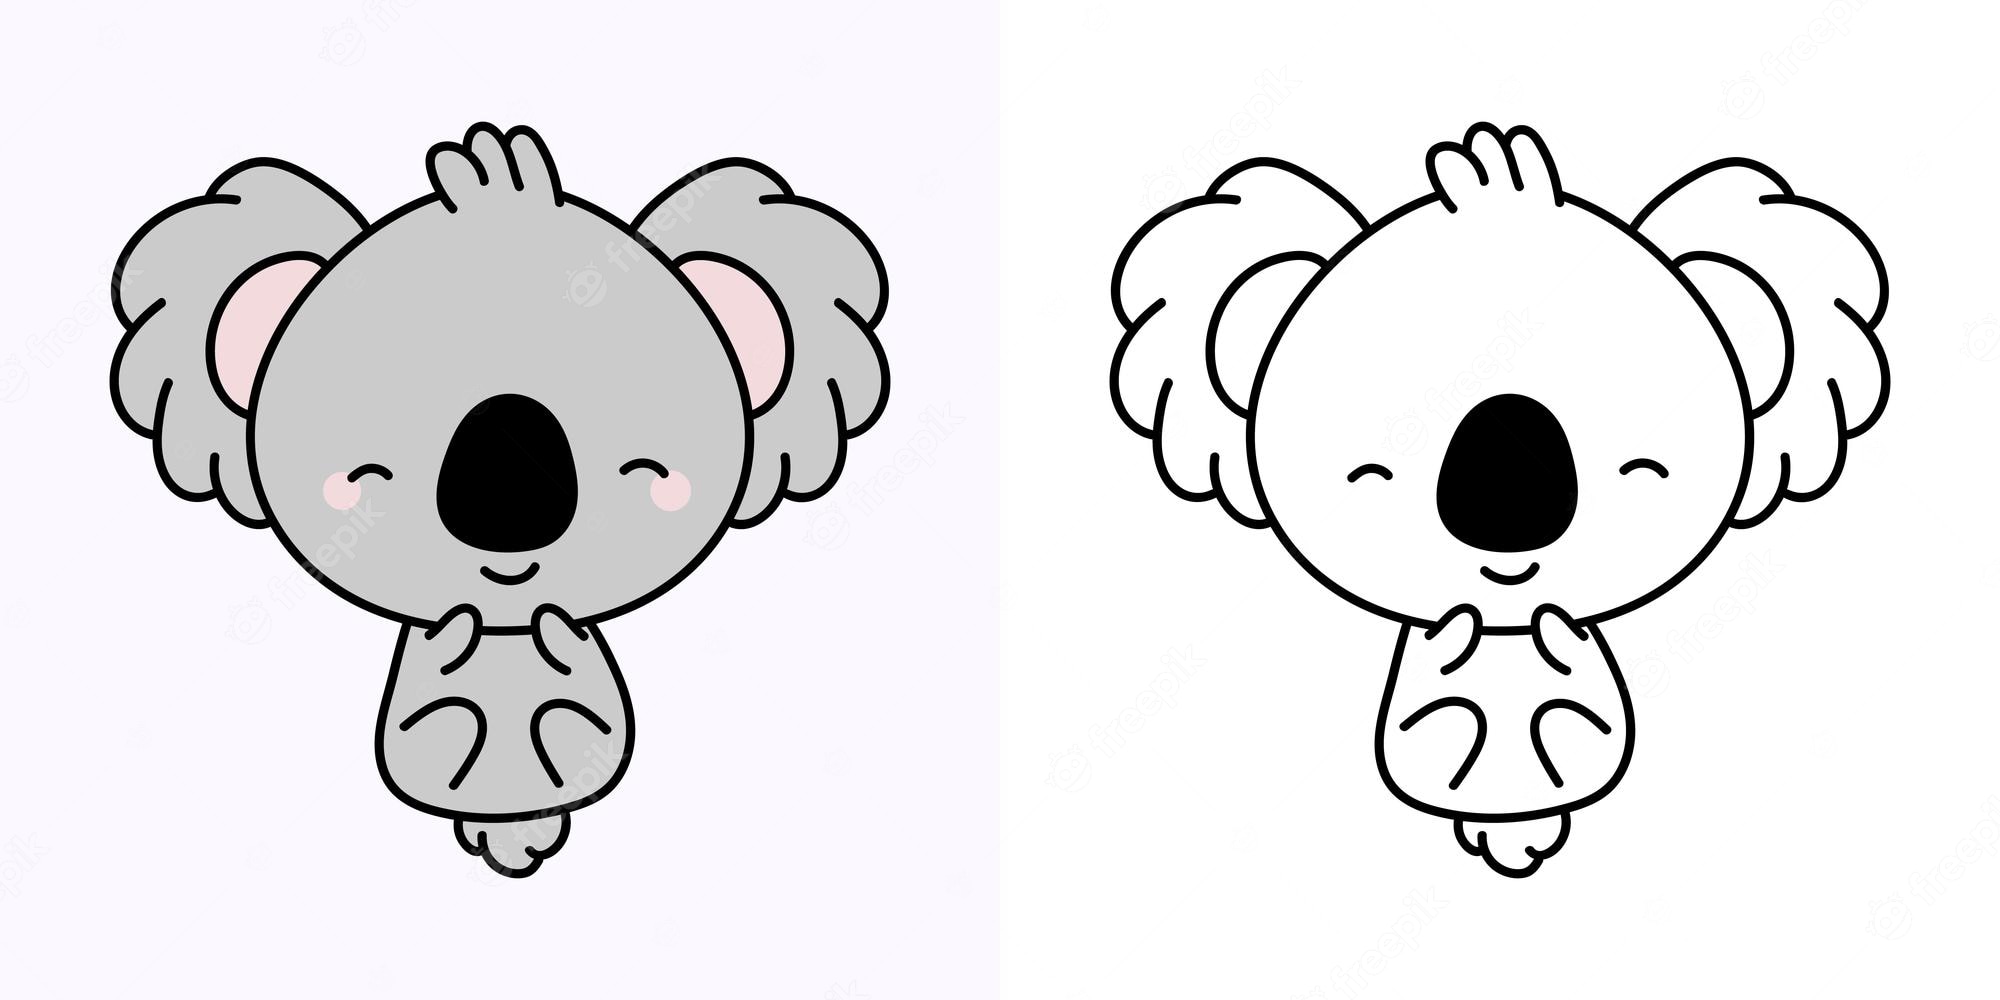 Premium Vector  Kawaii cute vector koala cartoon style drawing illustration